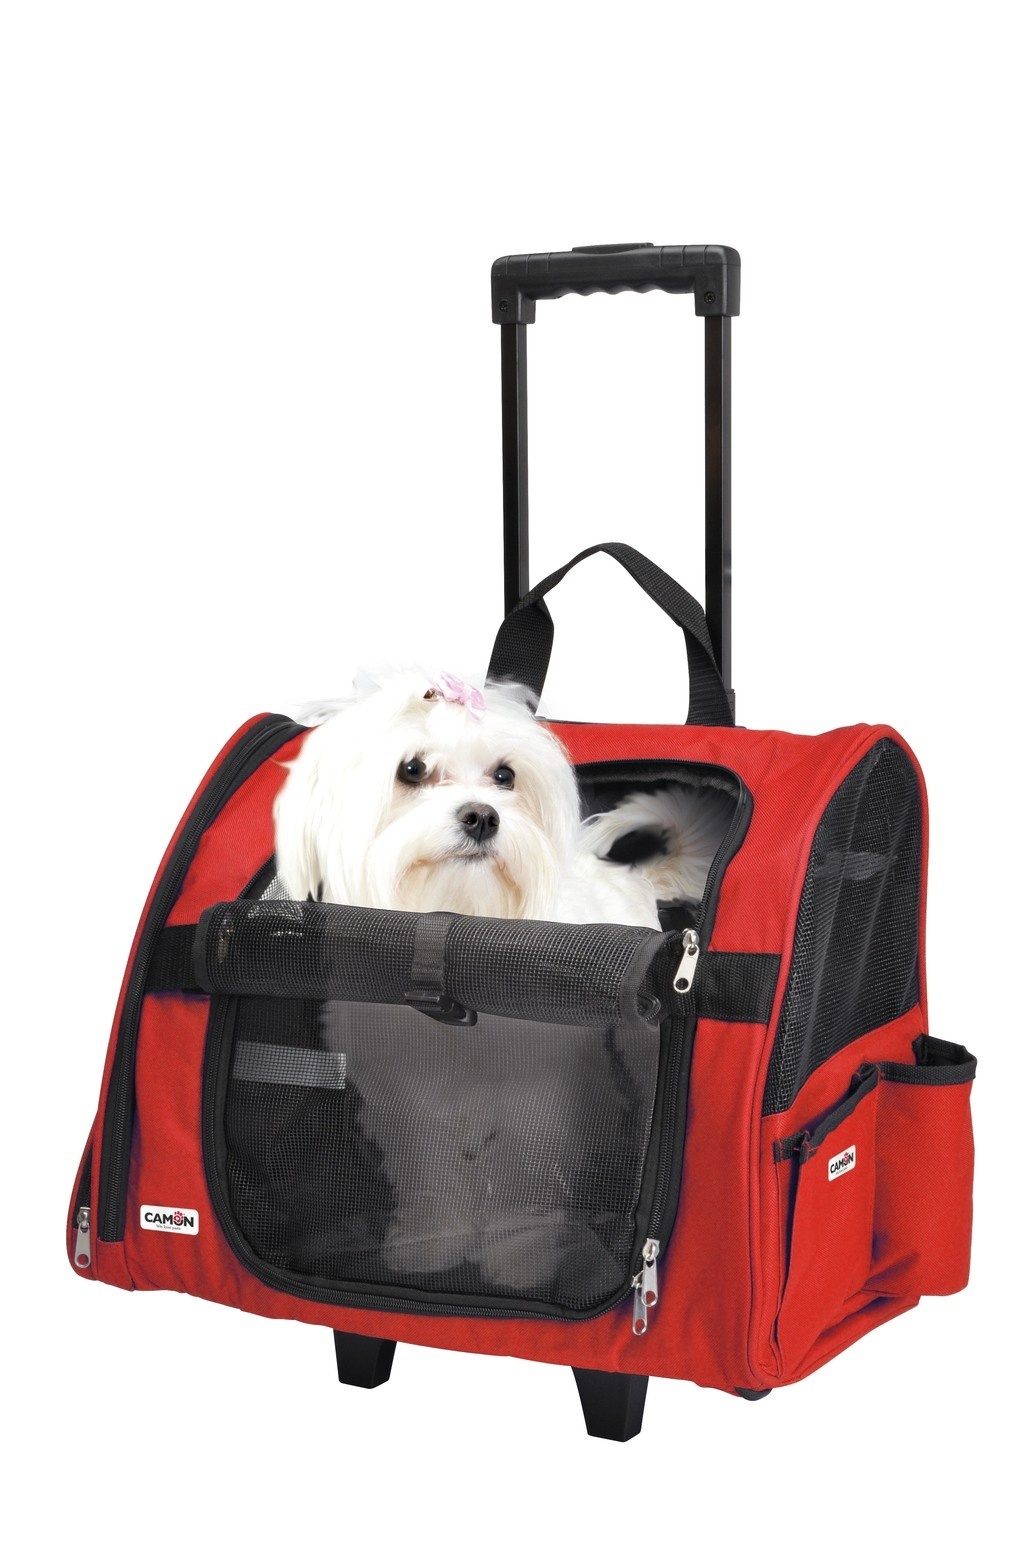 Camon Camon сумка-переноска Max для животных на колесах красная (43*26*36)